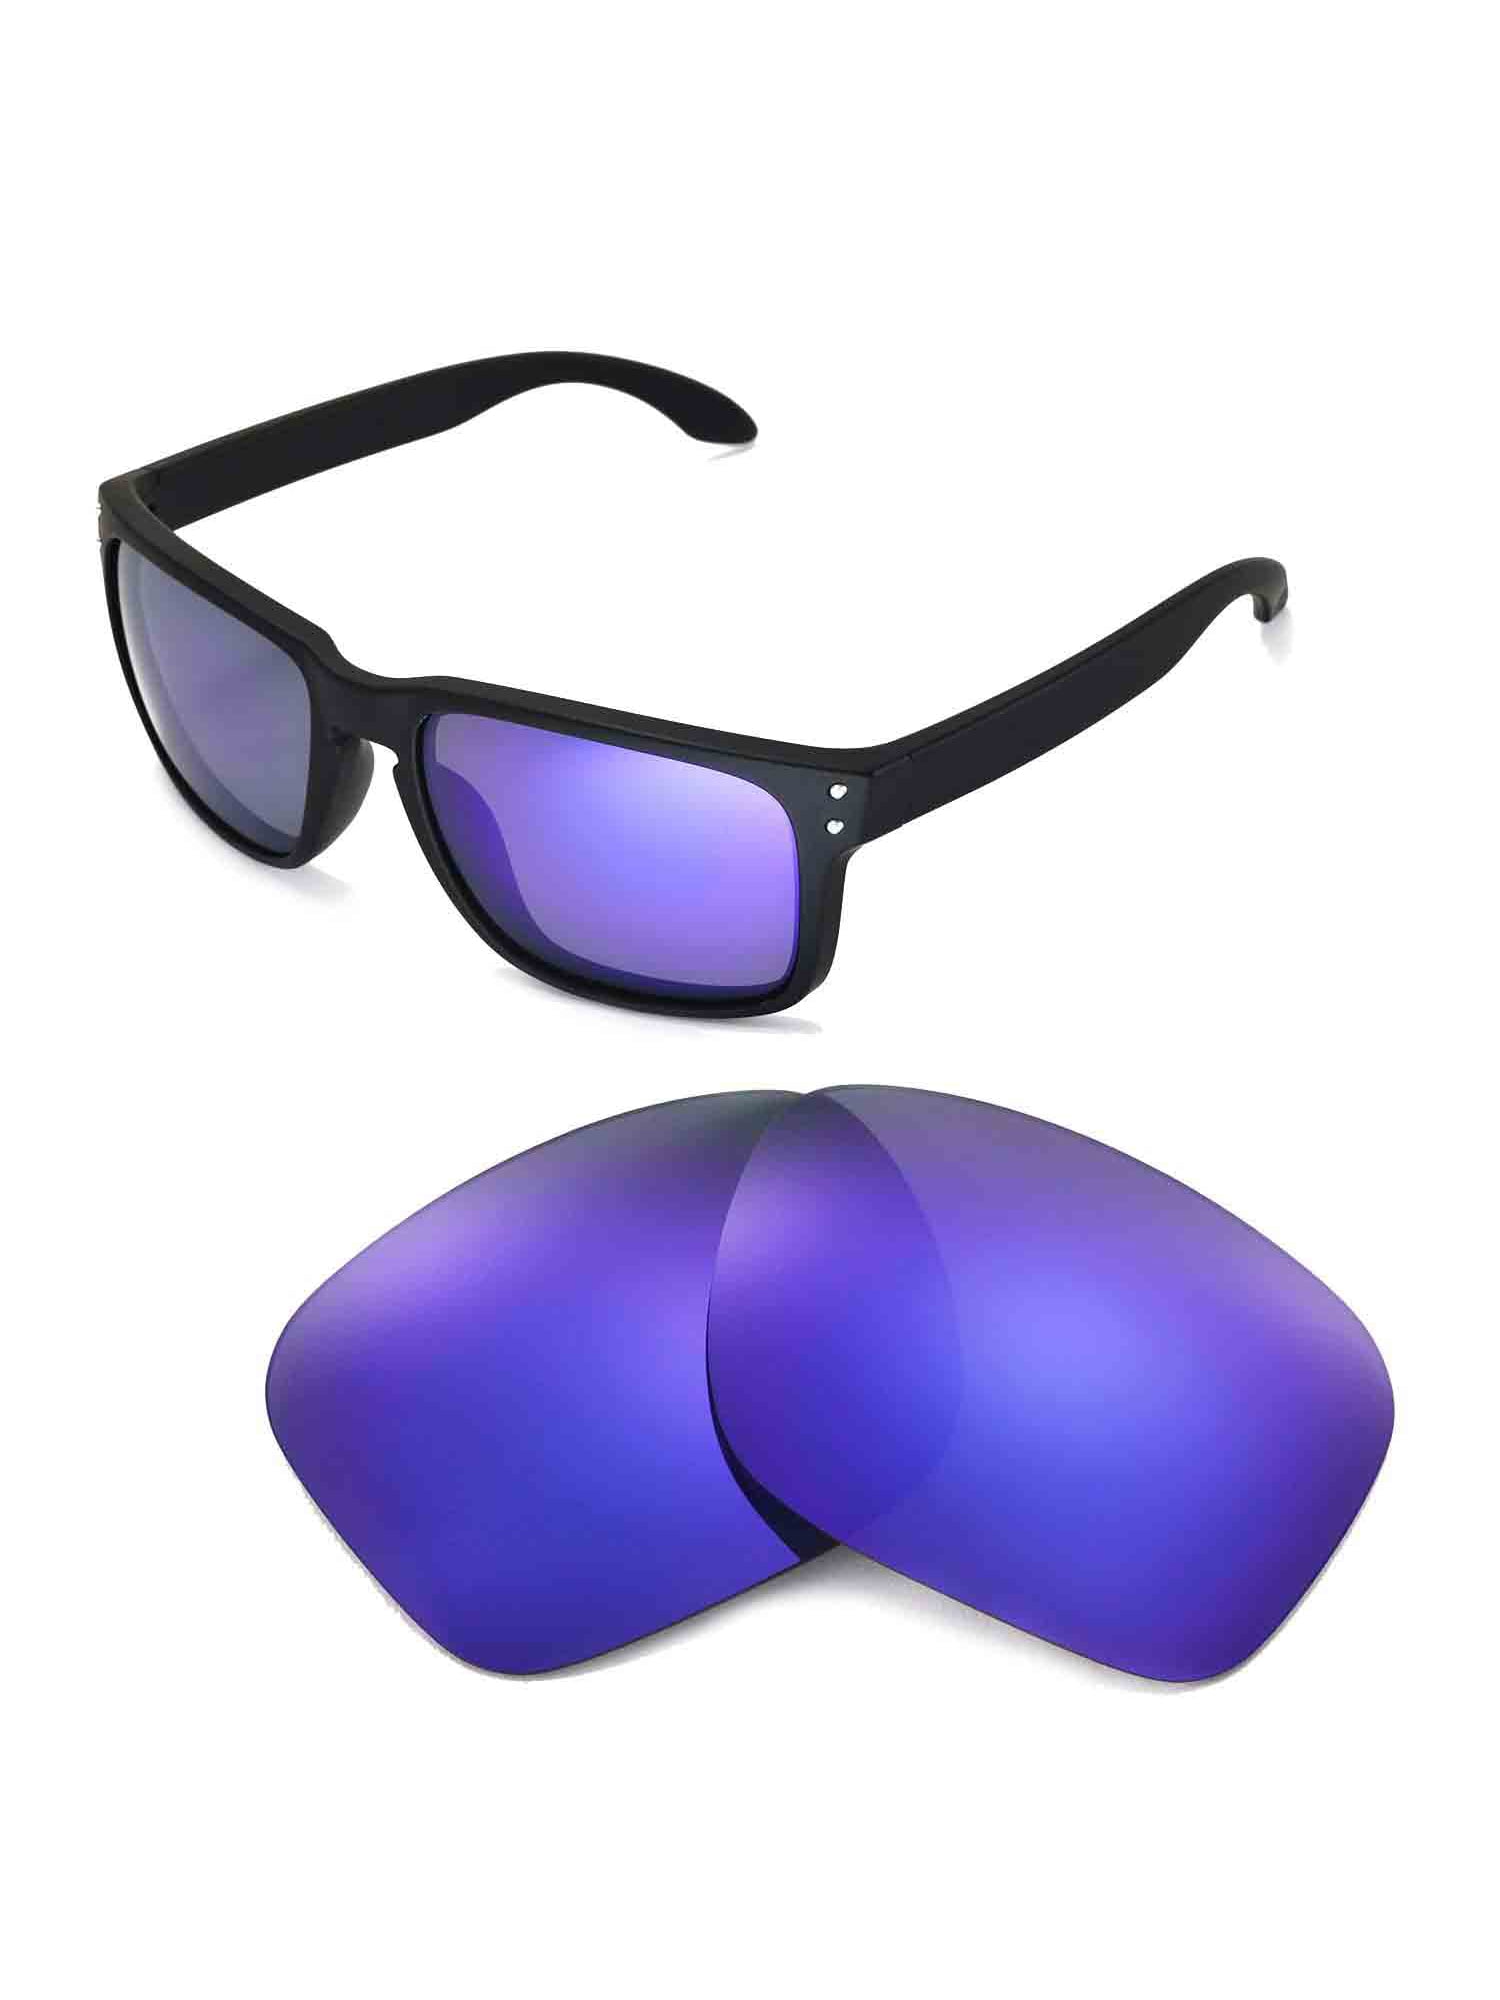 oakley sunglasses purple lens